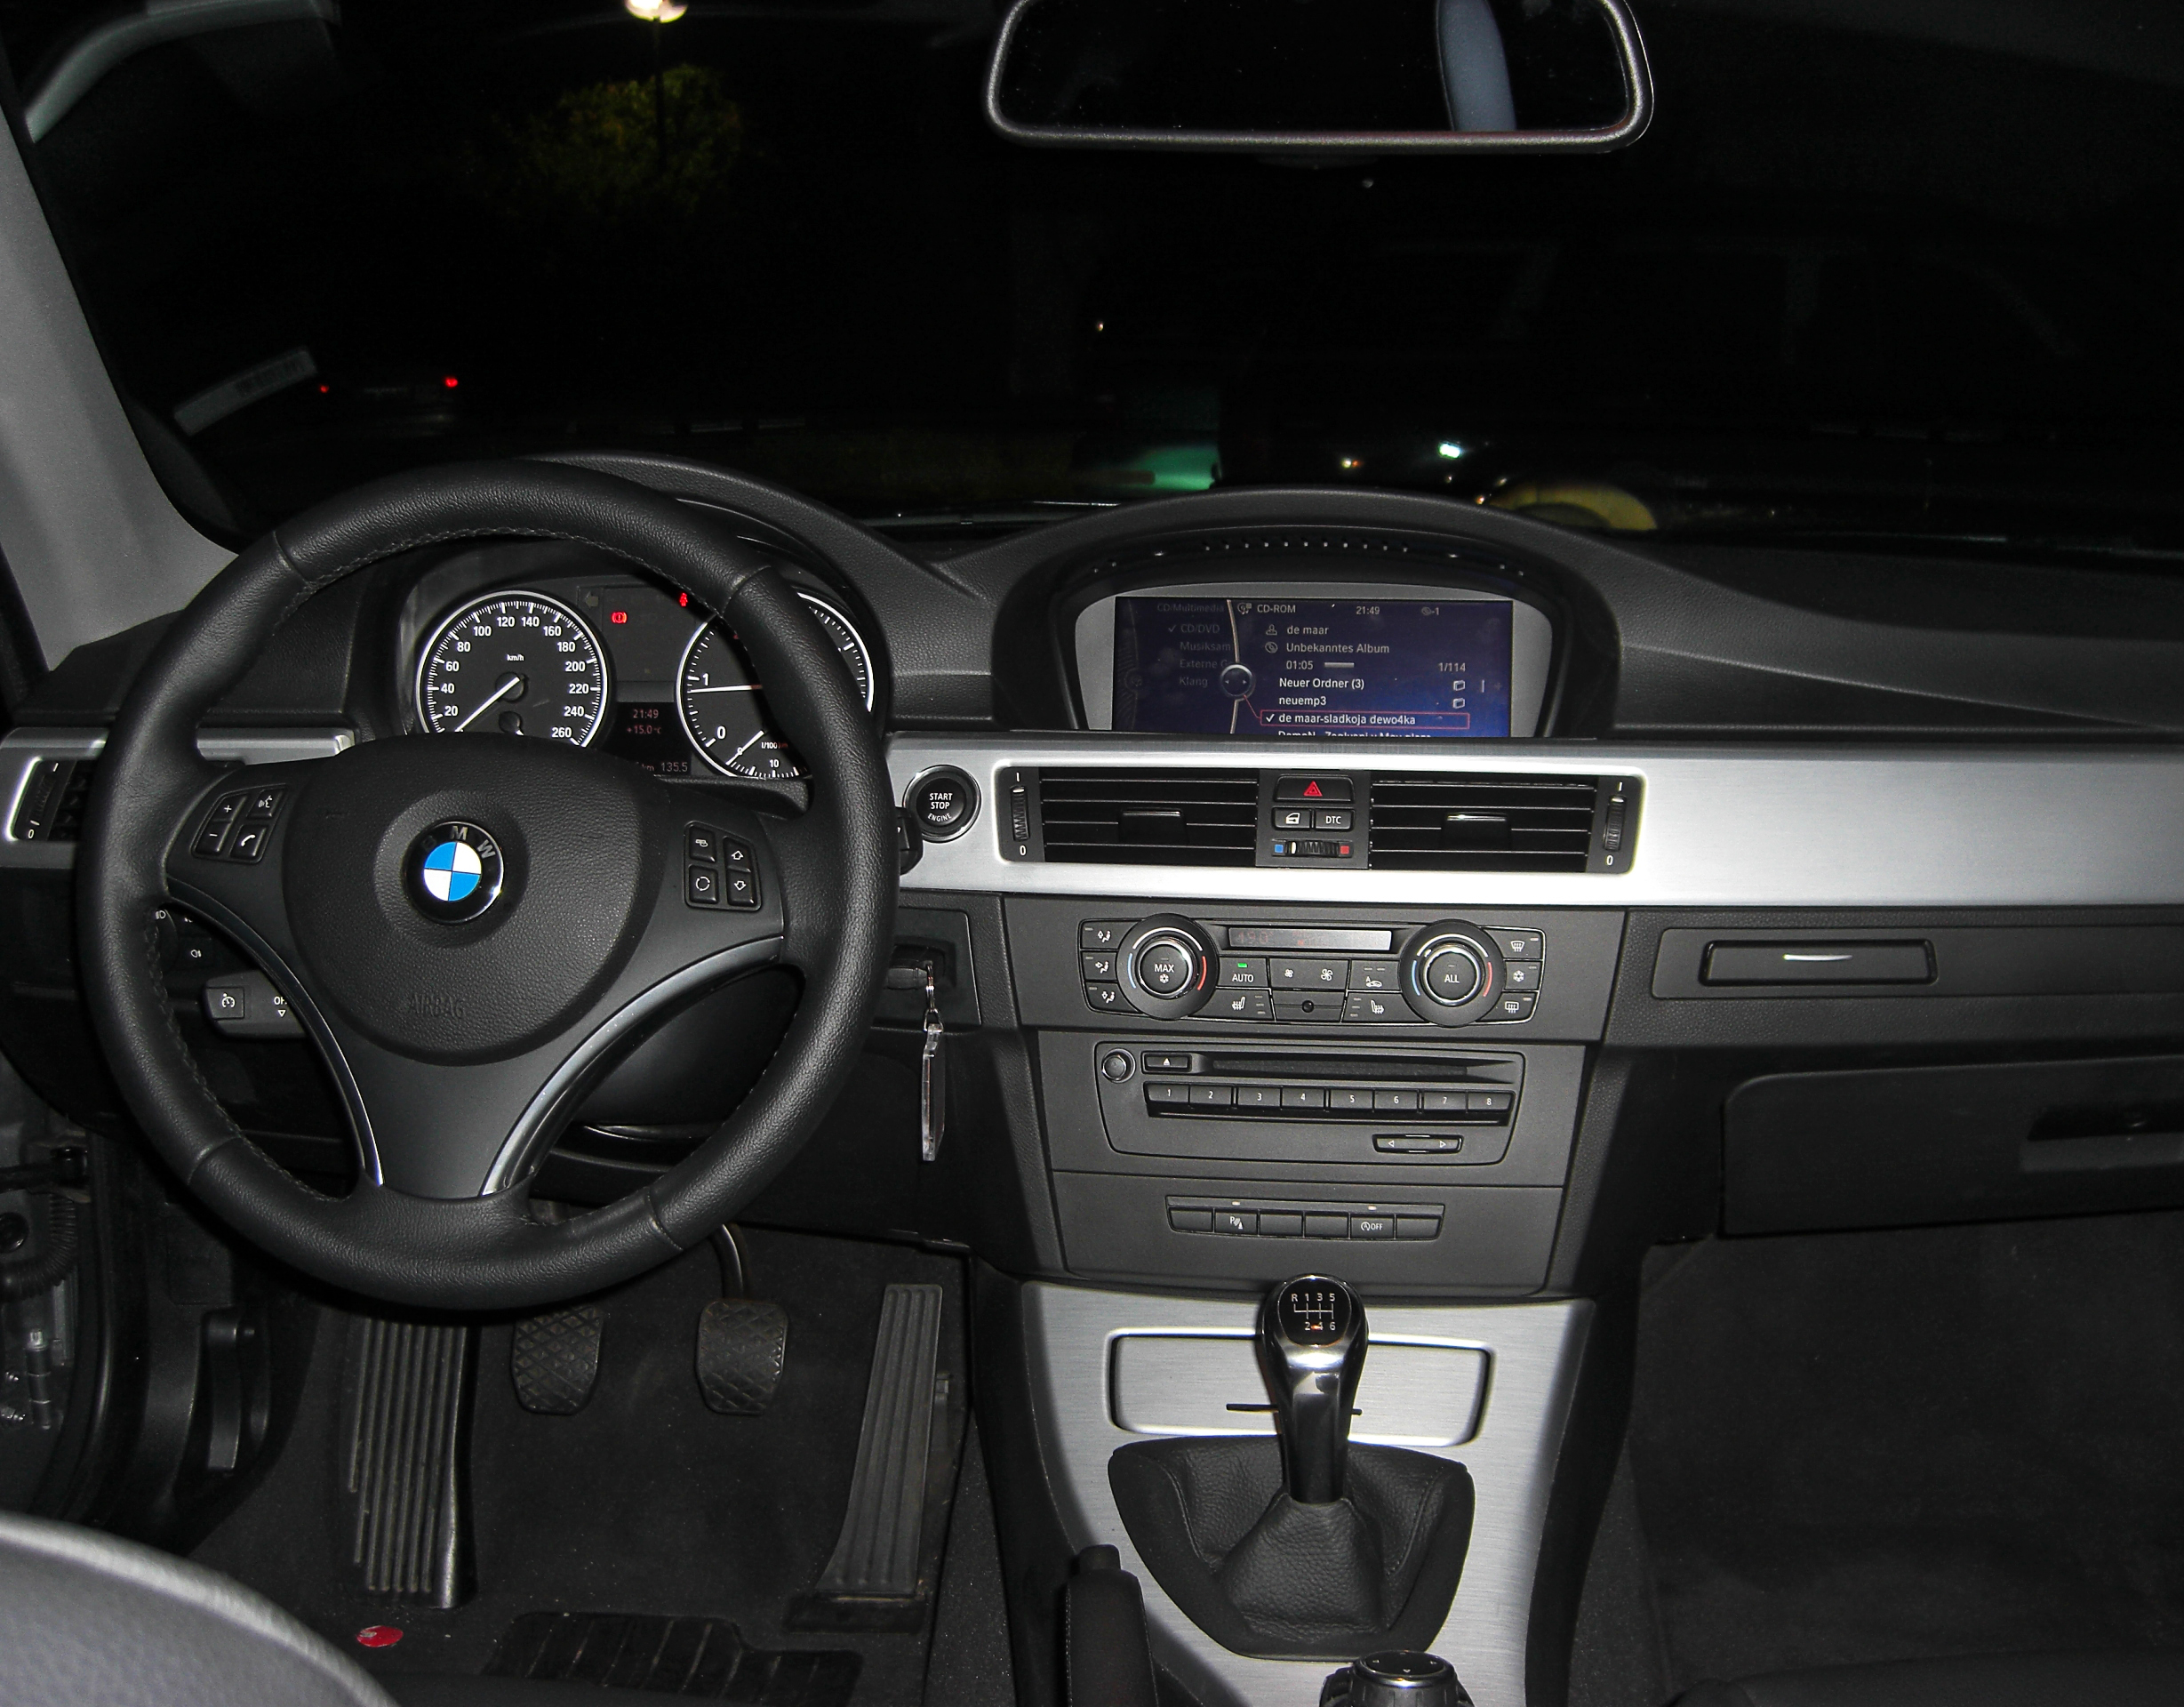 File:BMW 320d CoupÃ© (E92) Interieur 20100910.jpg - Wikimedia Commons